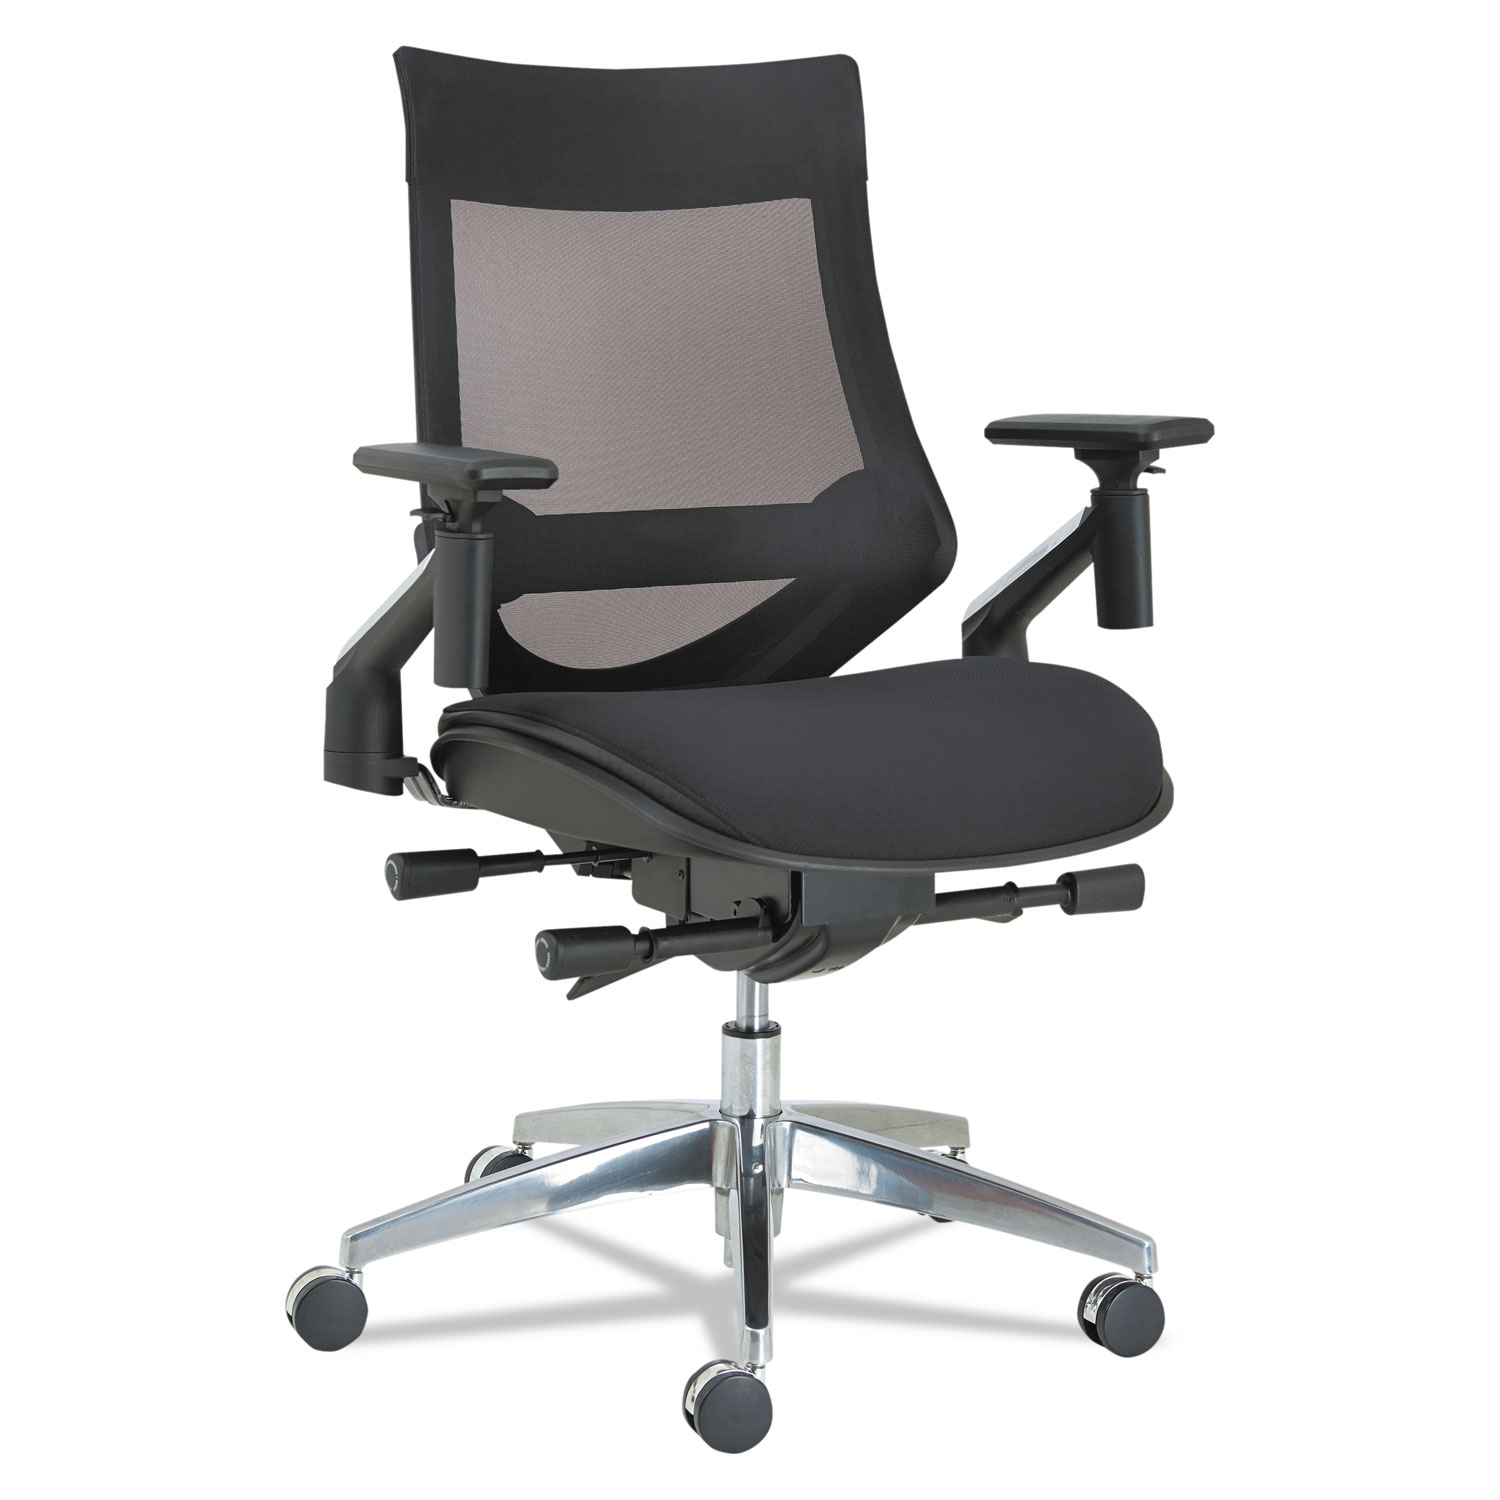  Alera ALEEBW4213 Alera EB-W Series Pivot Arm Multifunction Mesh Chair, Supports up to 275 lbs., Black Seat/Black Back, Aluminum Base (ALEEBW4213) 